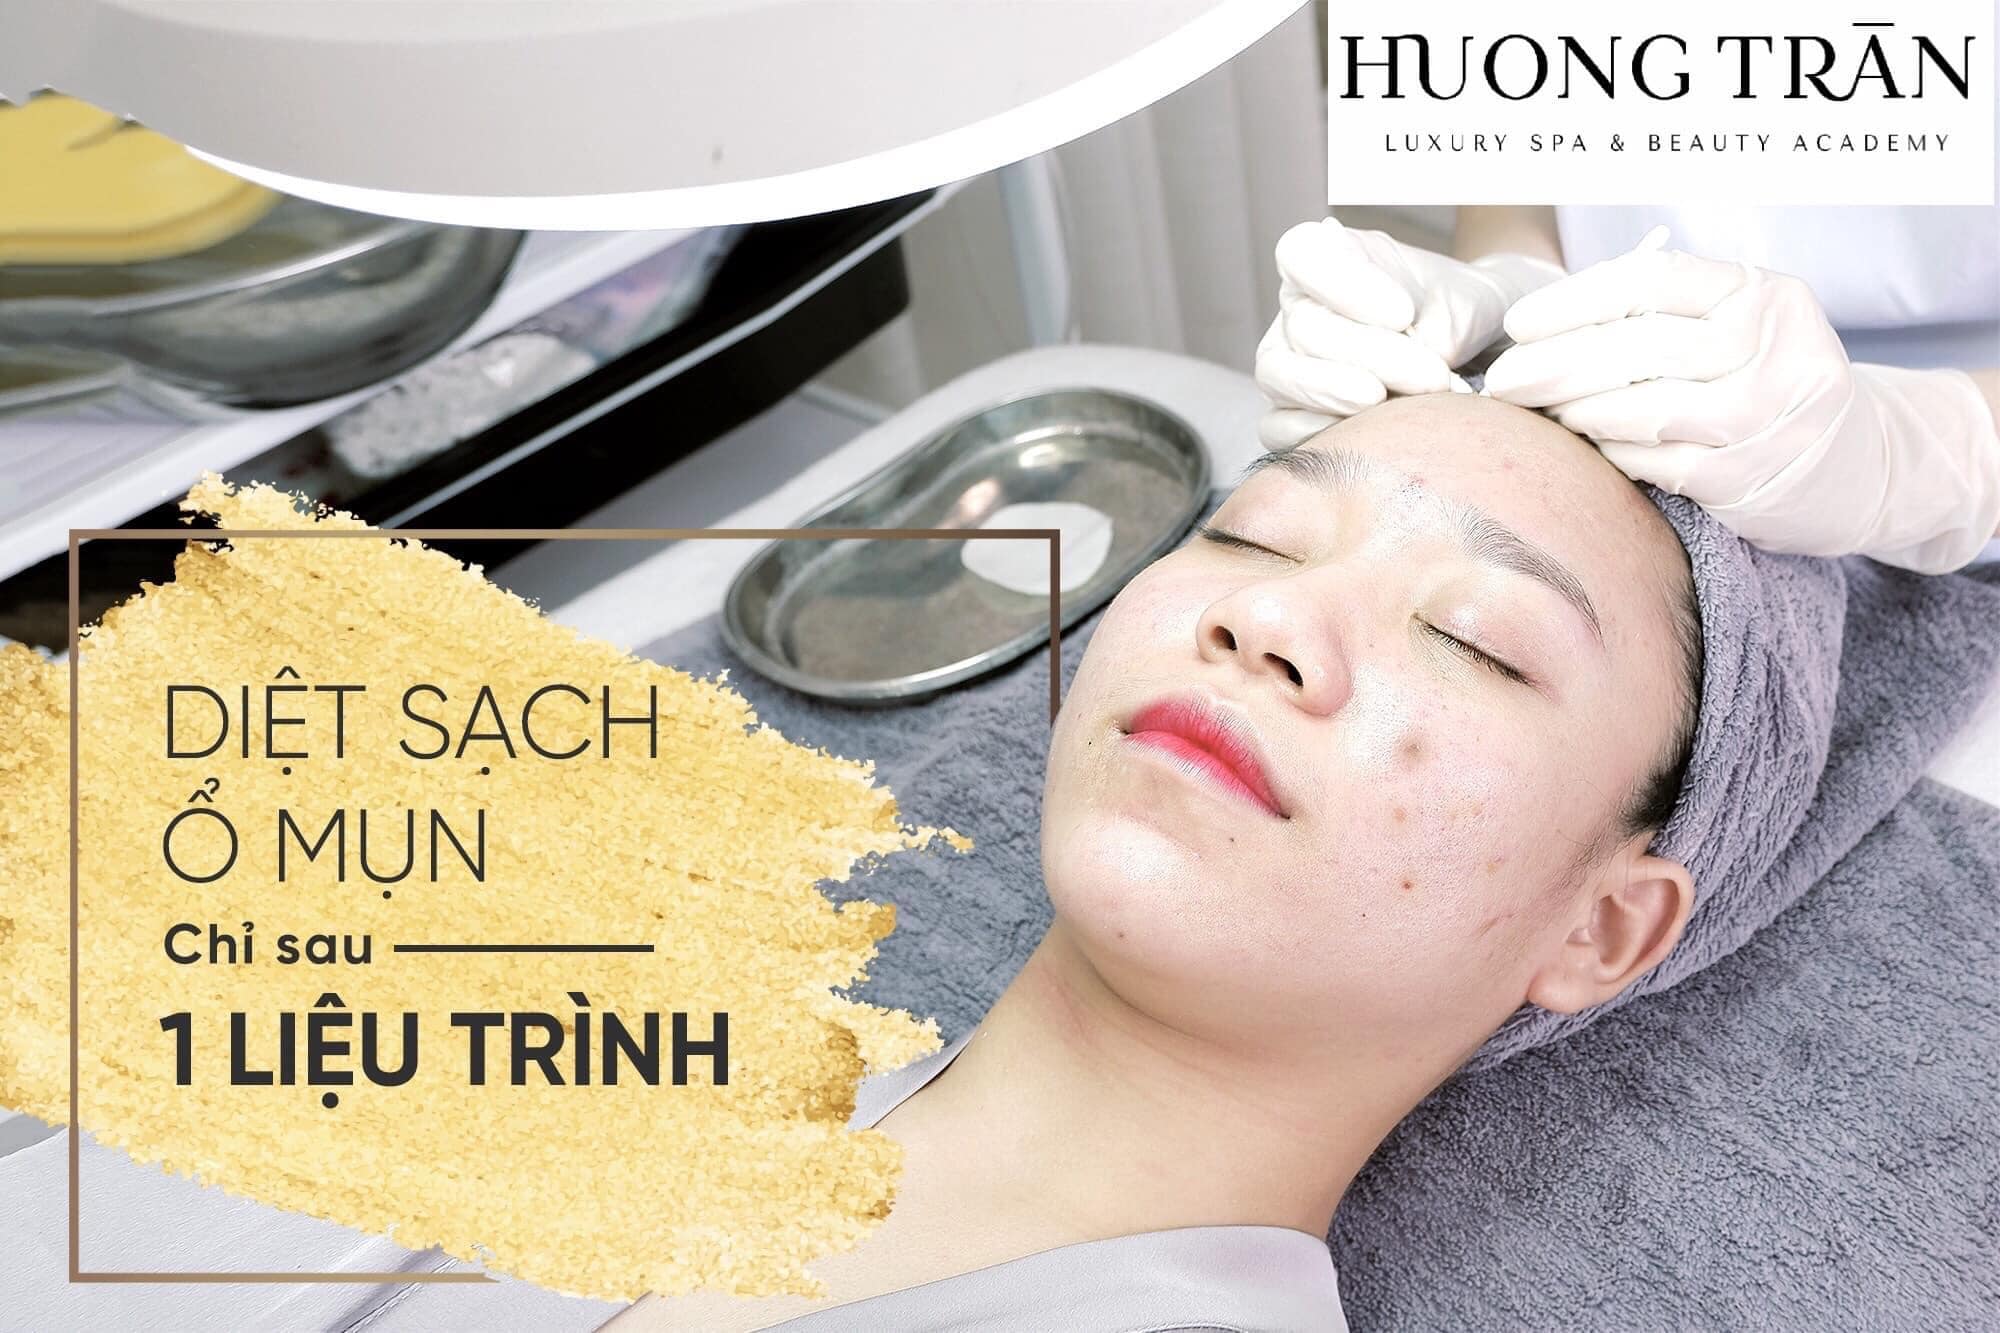 Huong Tran - Luxury Spa & Beauty Academy ảnh 1